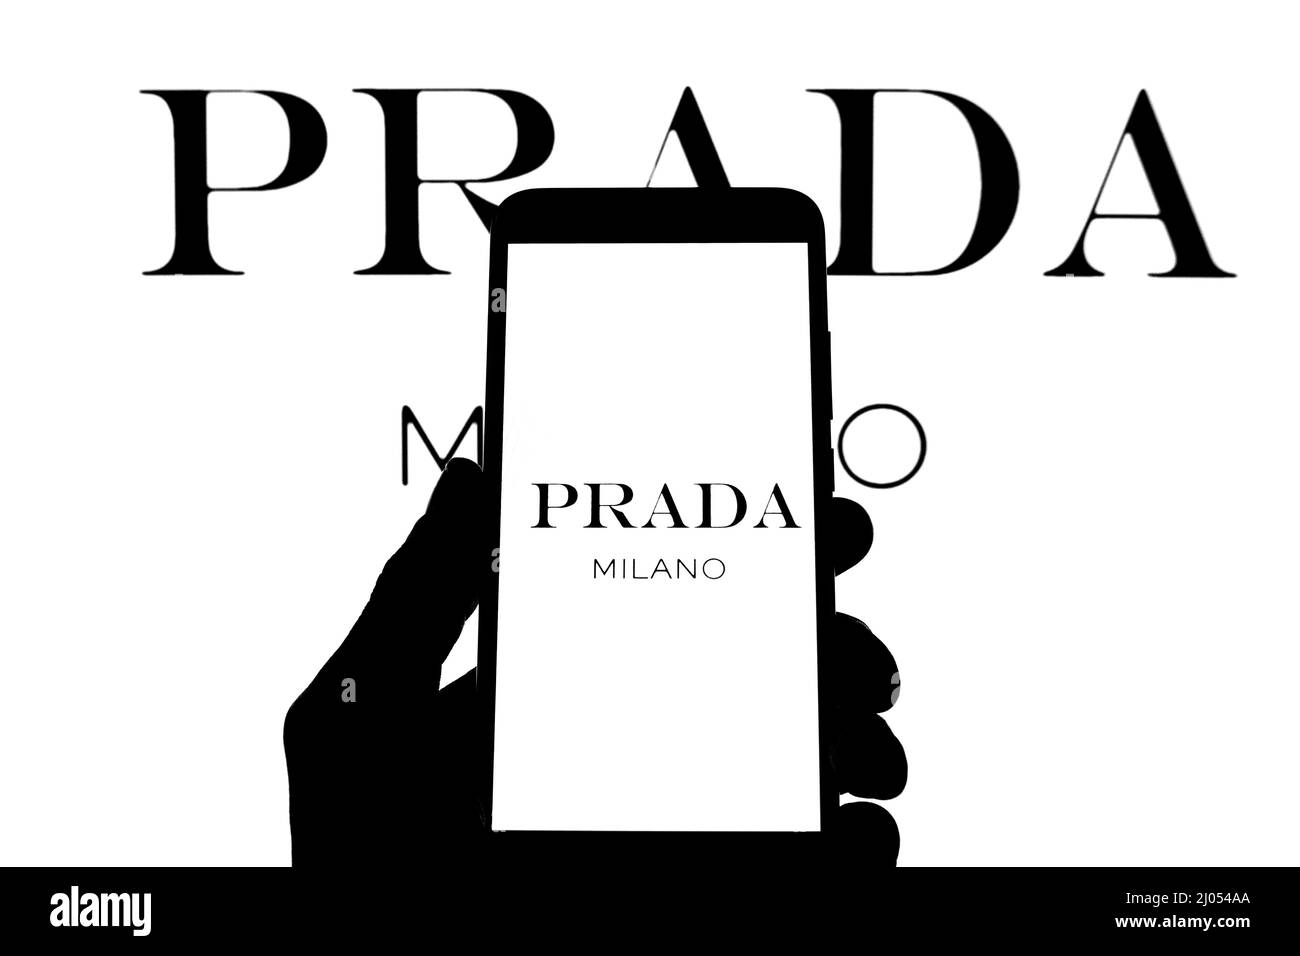 Prada logo Black and White Stock Photos & Images - Alamy